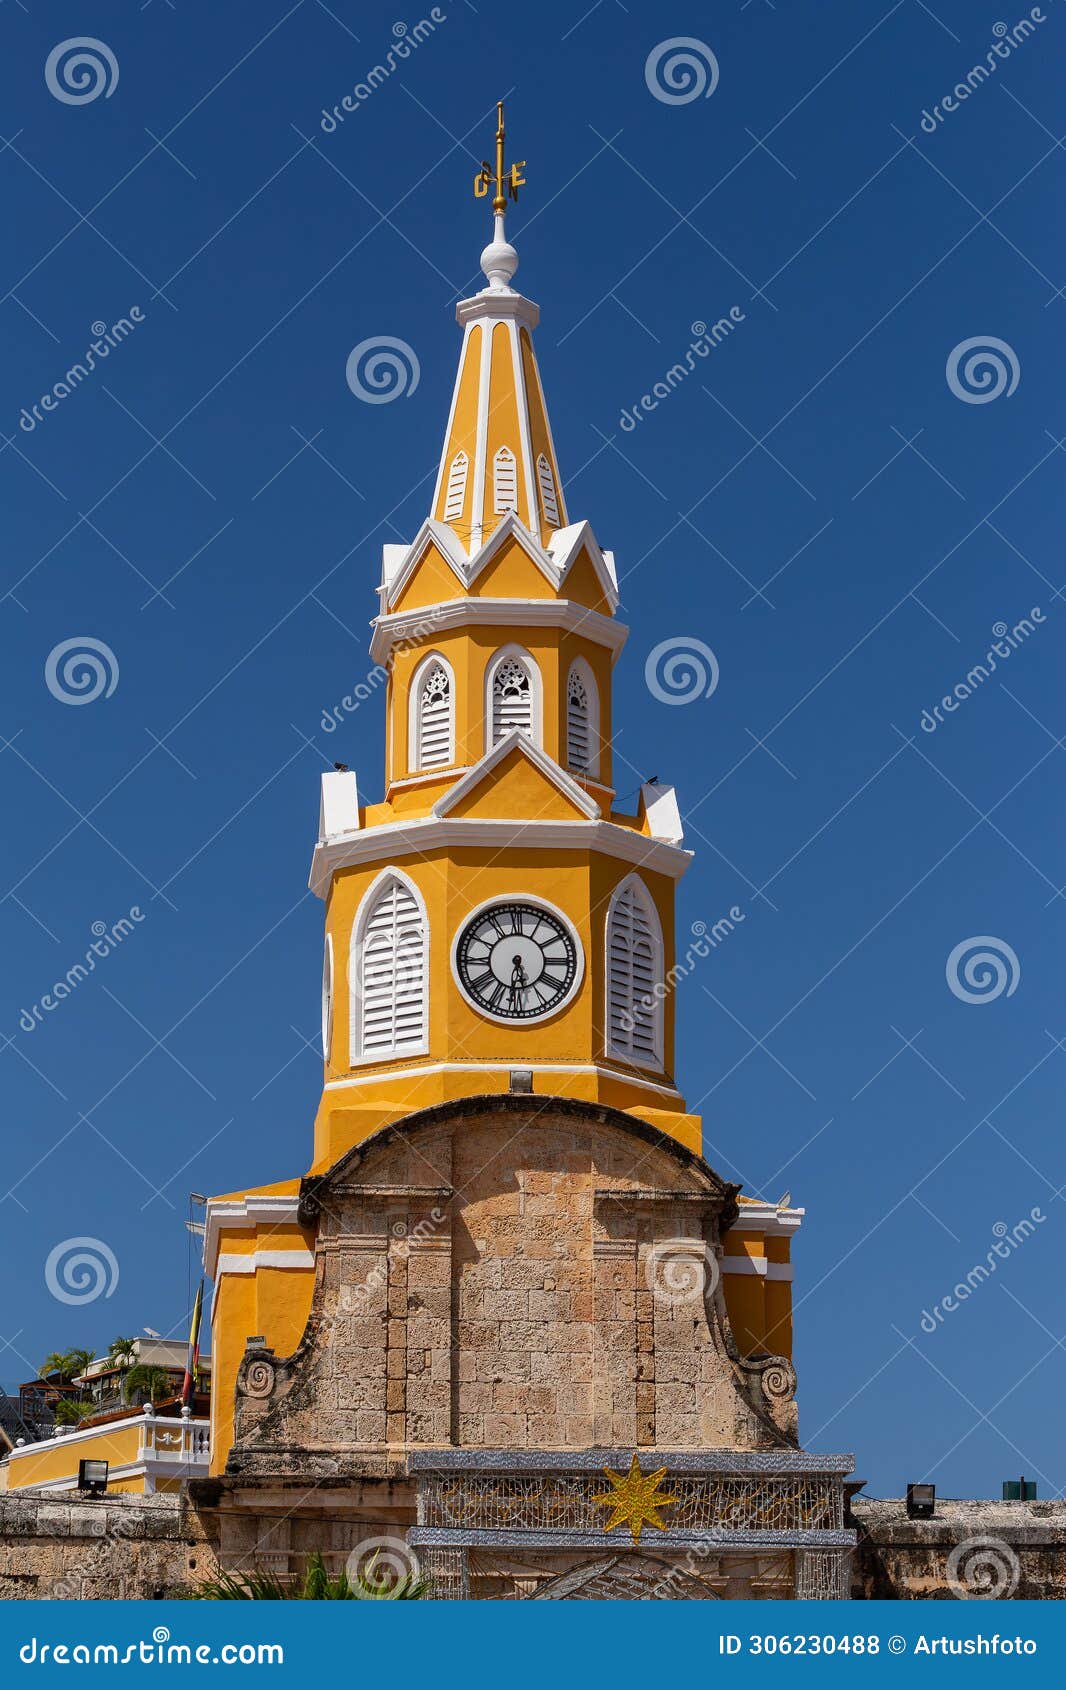 puerta del reloj, main city gate of the historic center of cartagena de indias, in colombia